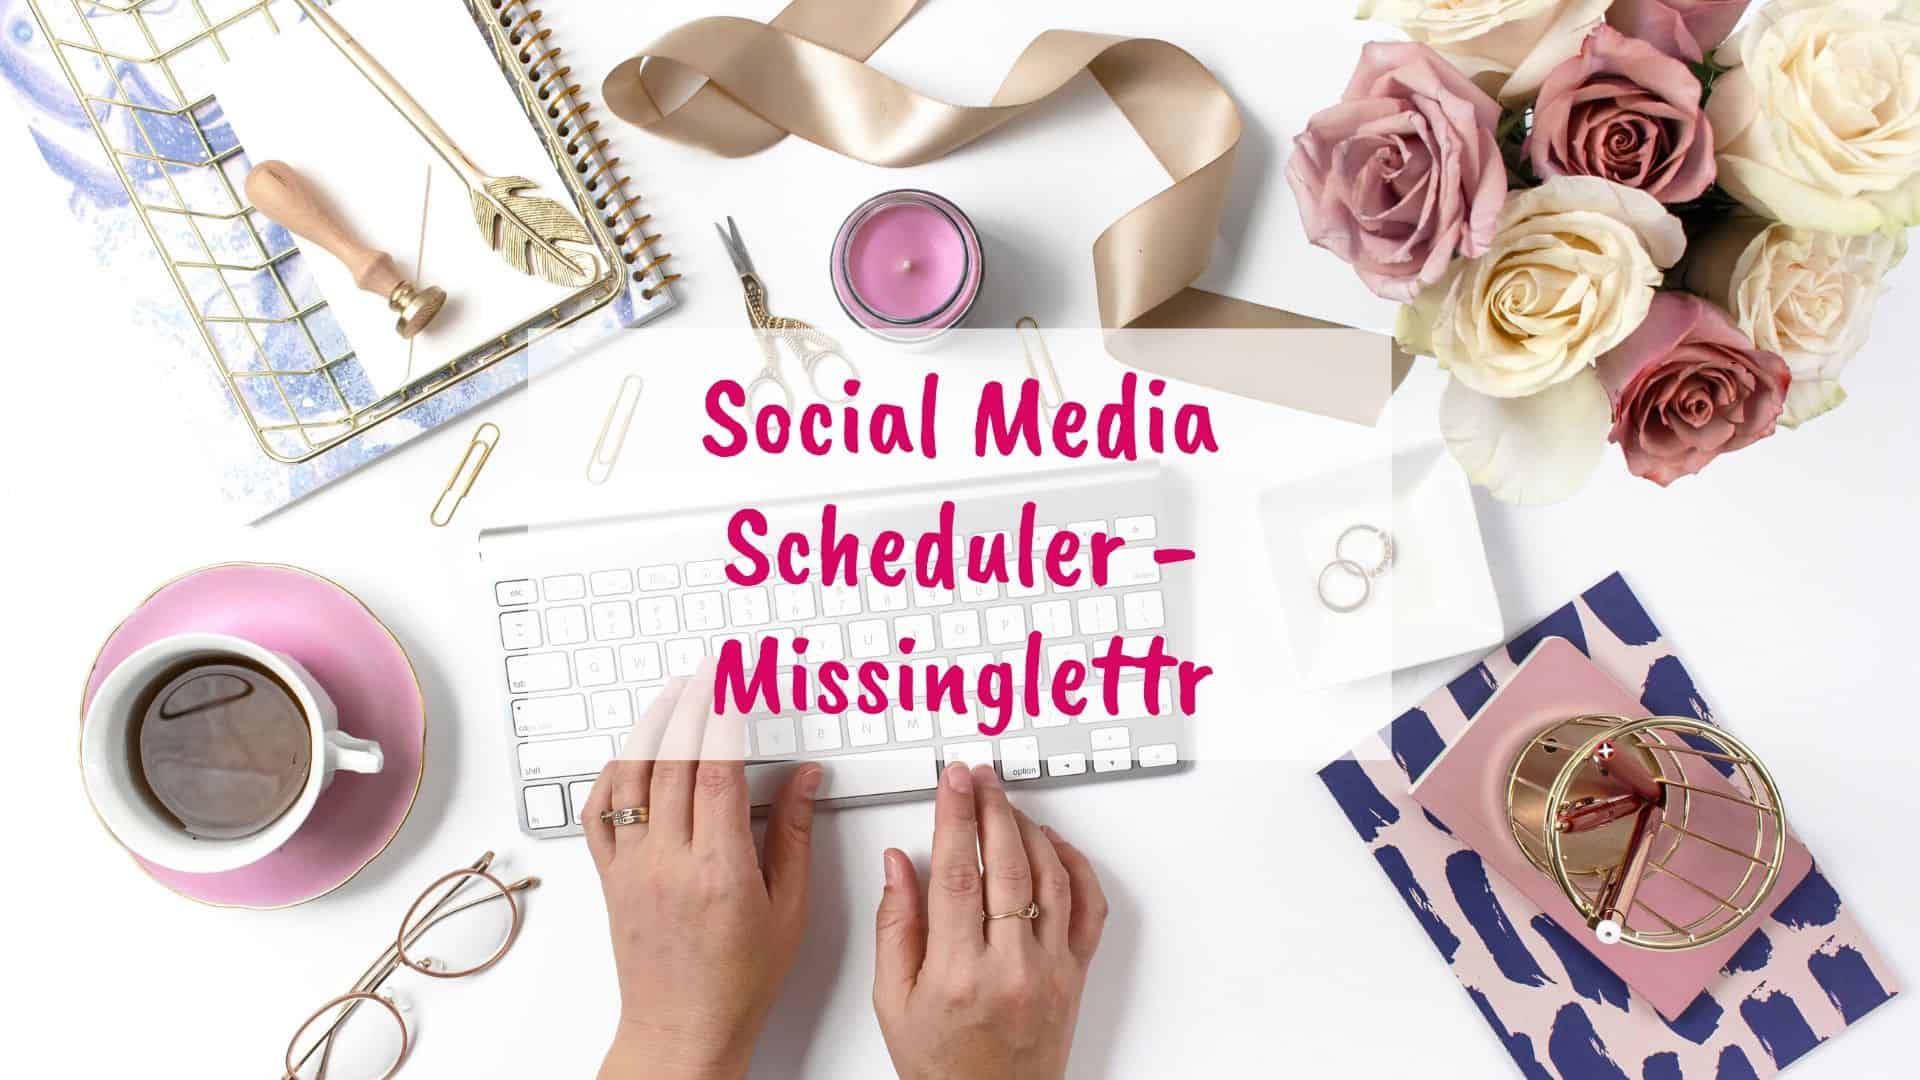 Missinglettr, social media scheduler, Twitter automation tool, auto-posting to social, social media marketing